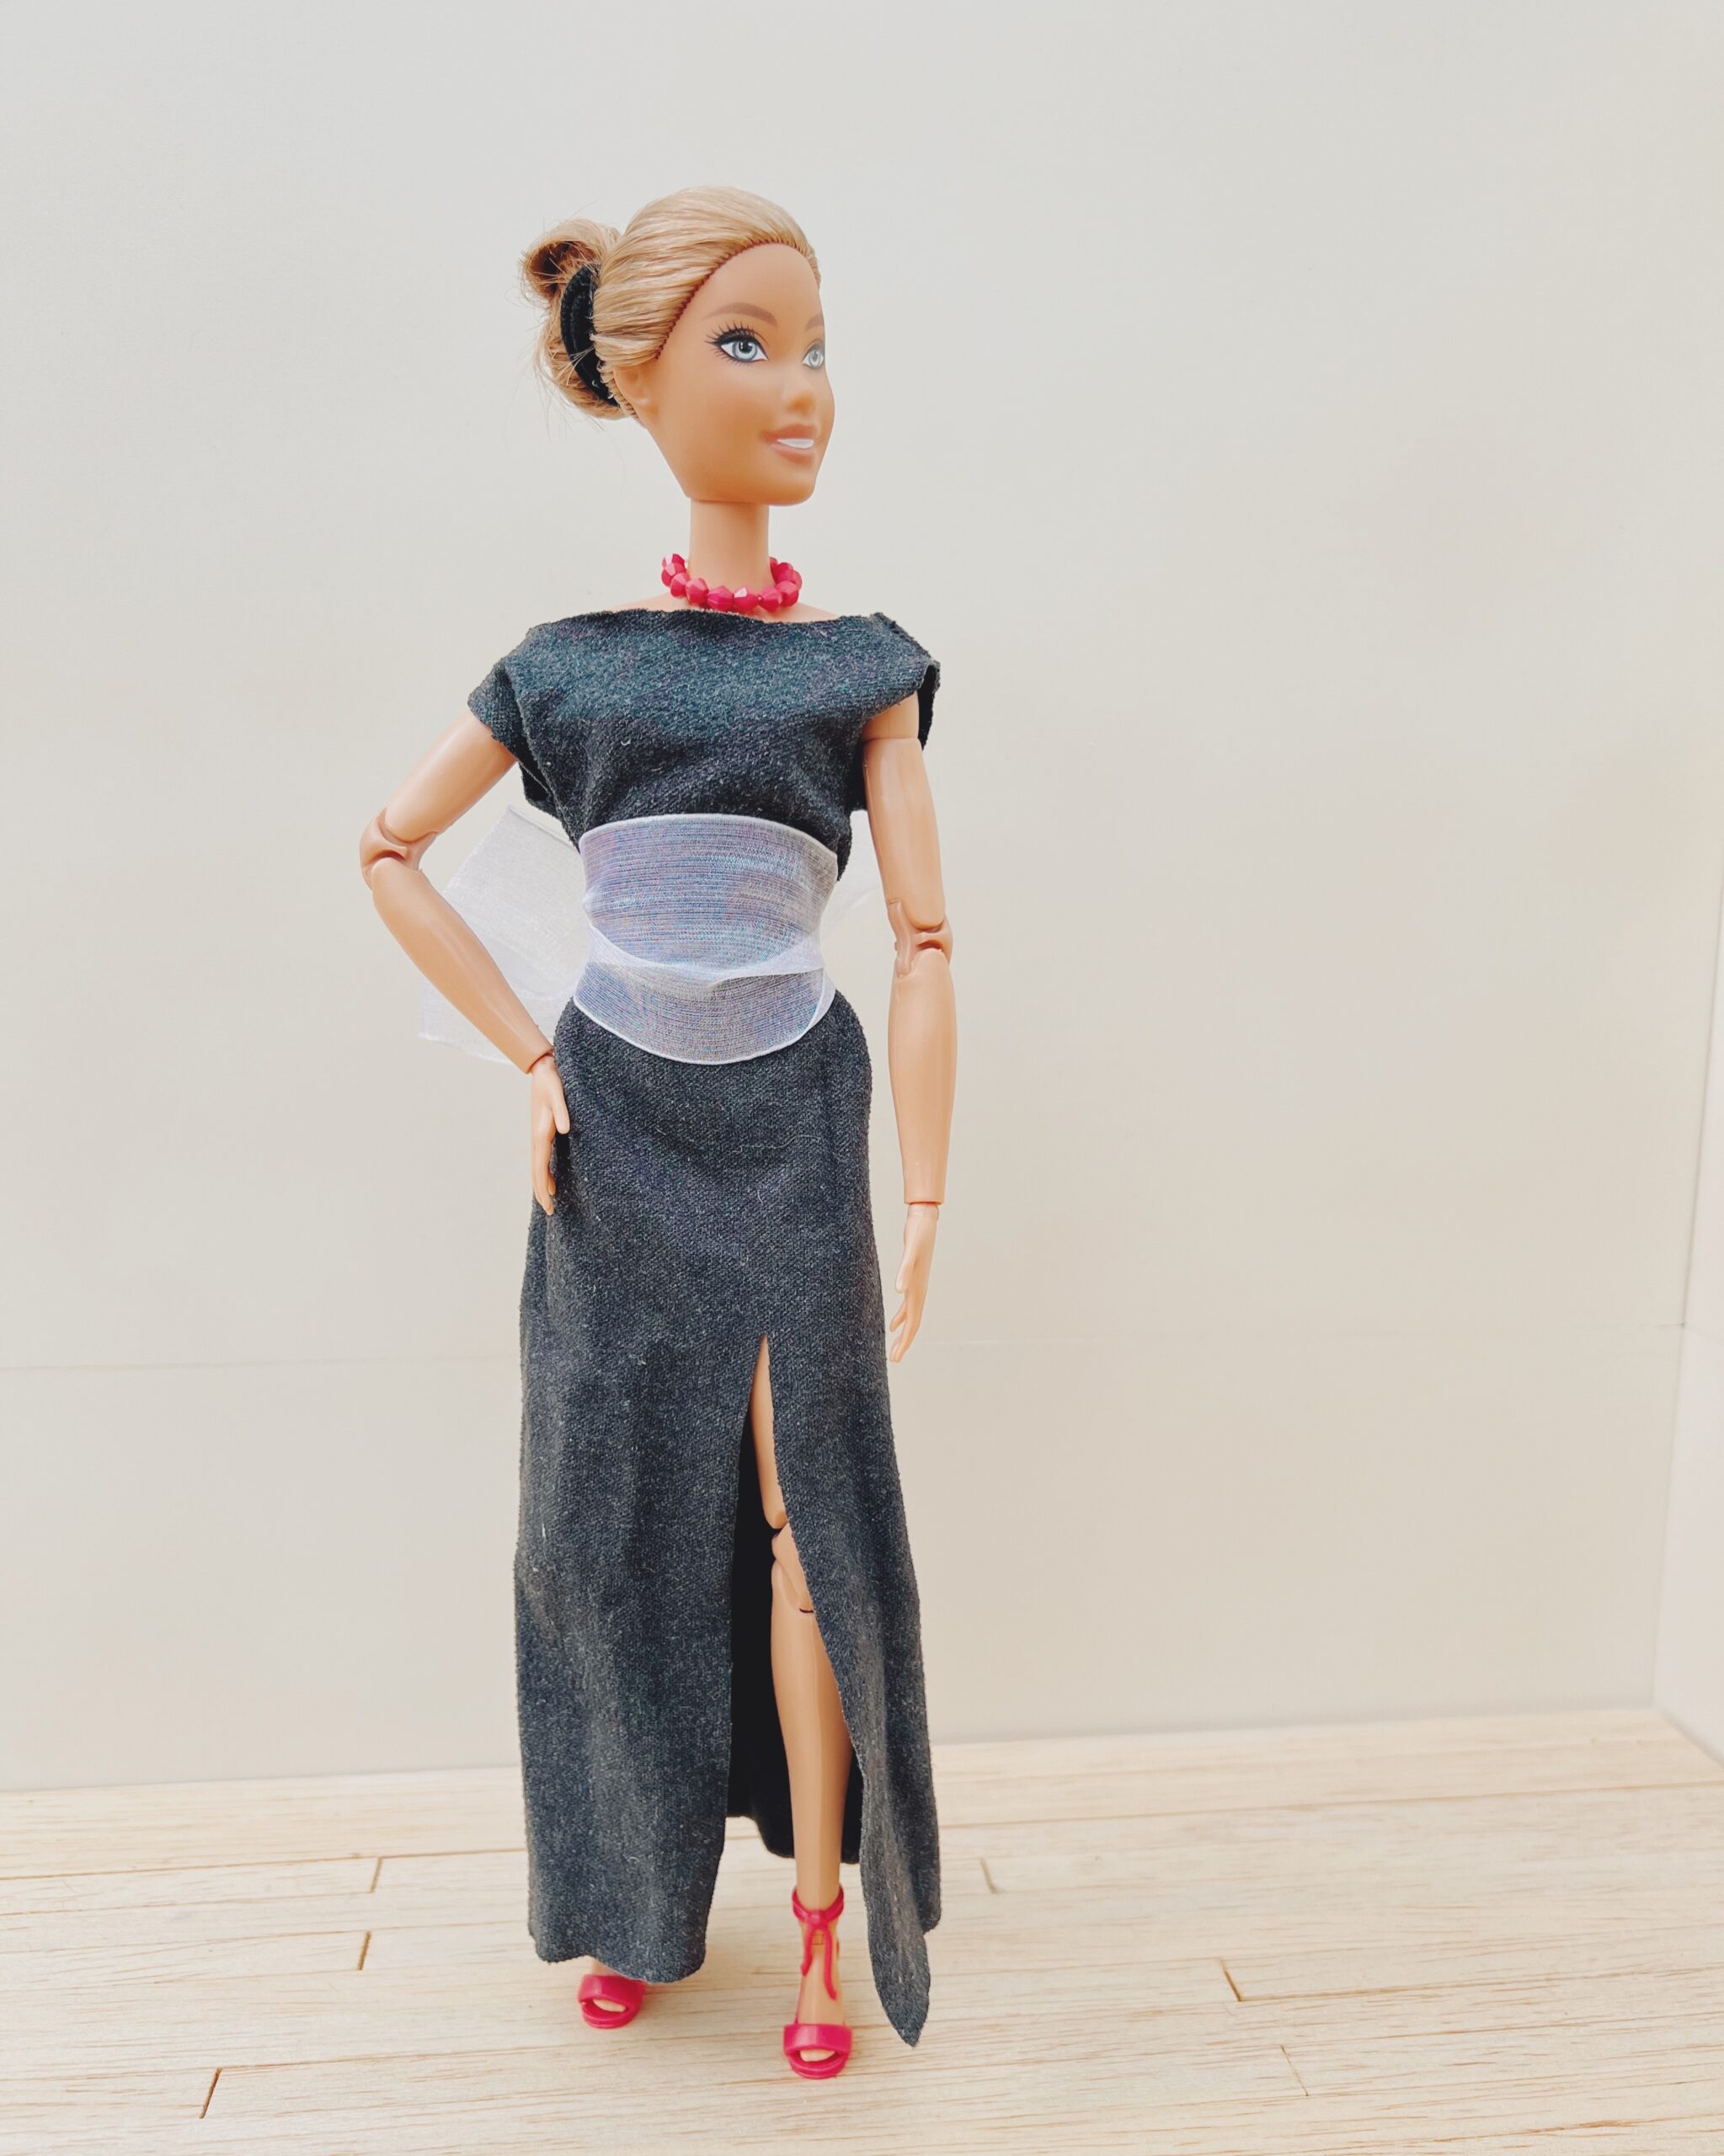 How to make a no sew Barbie sock dress - Galaxia Dolls